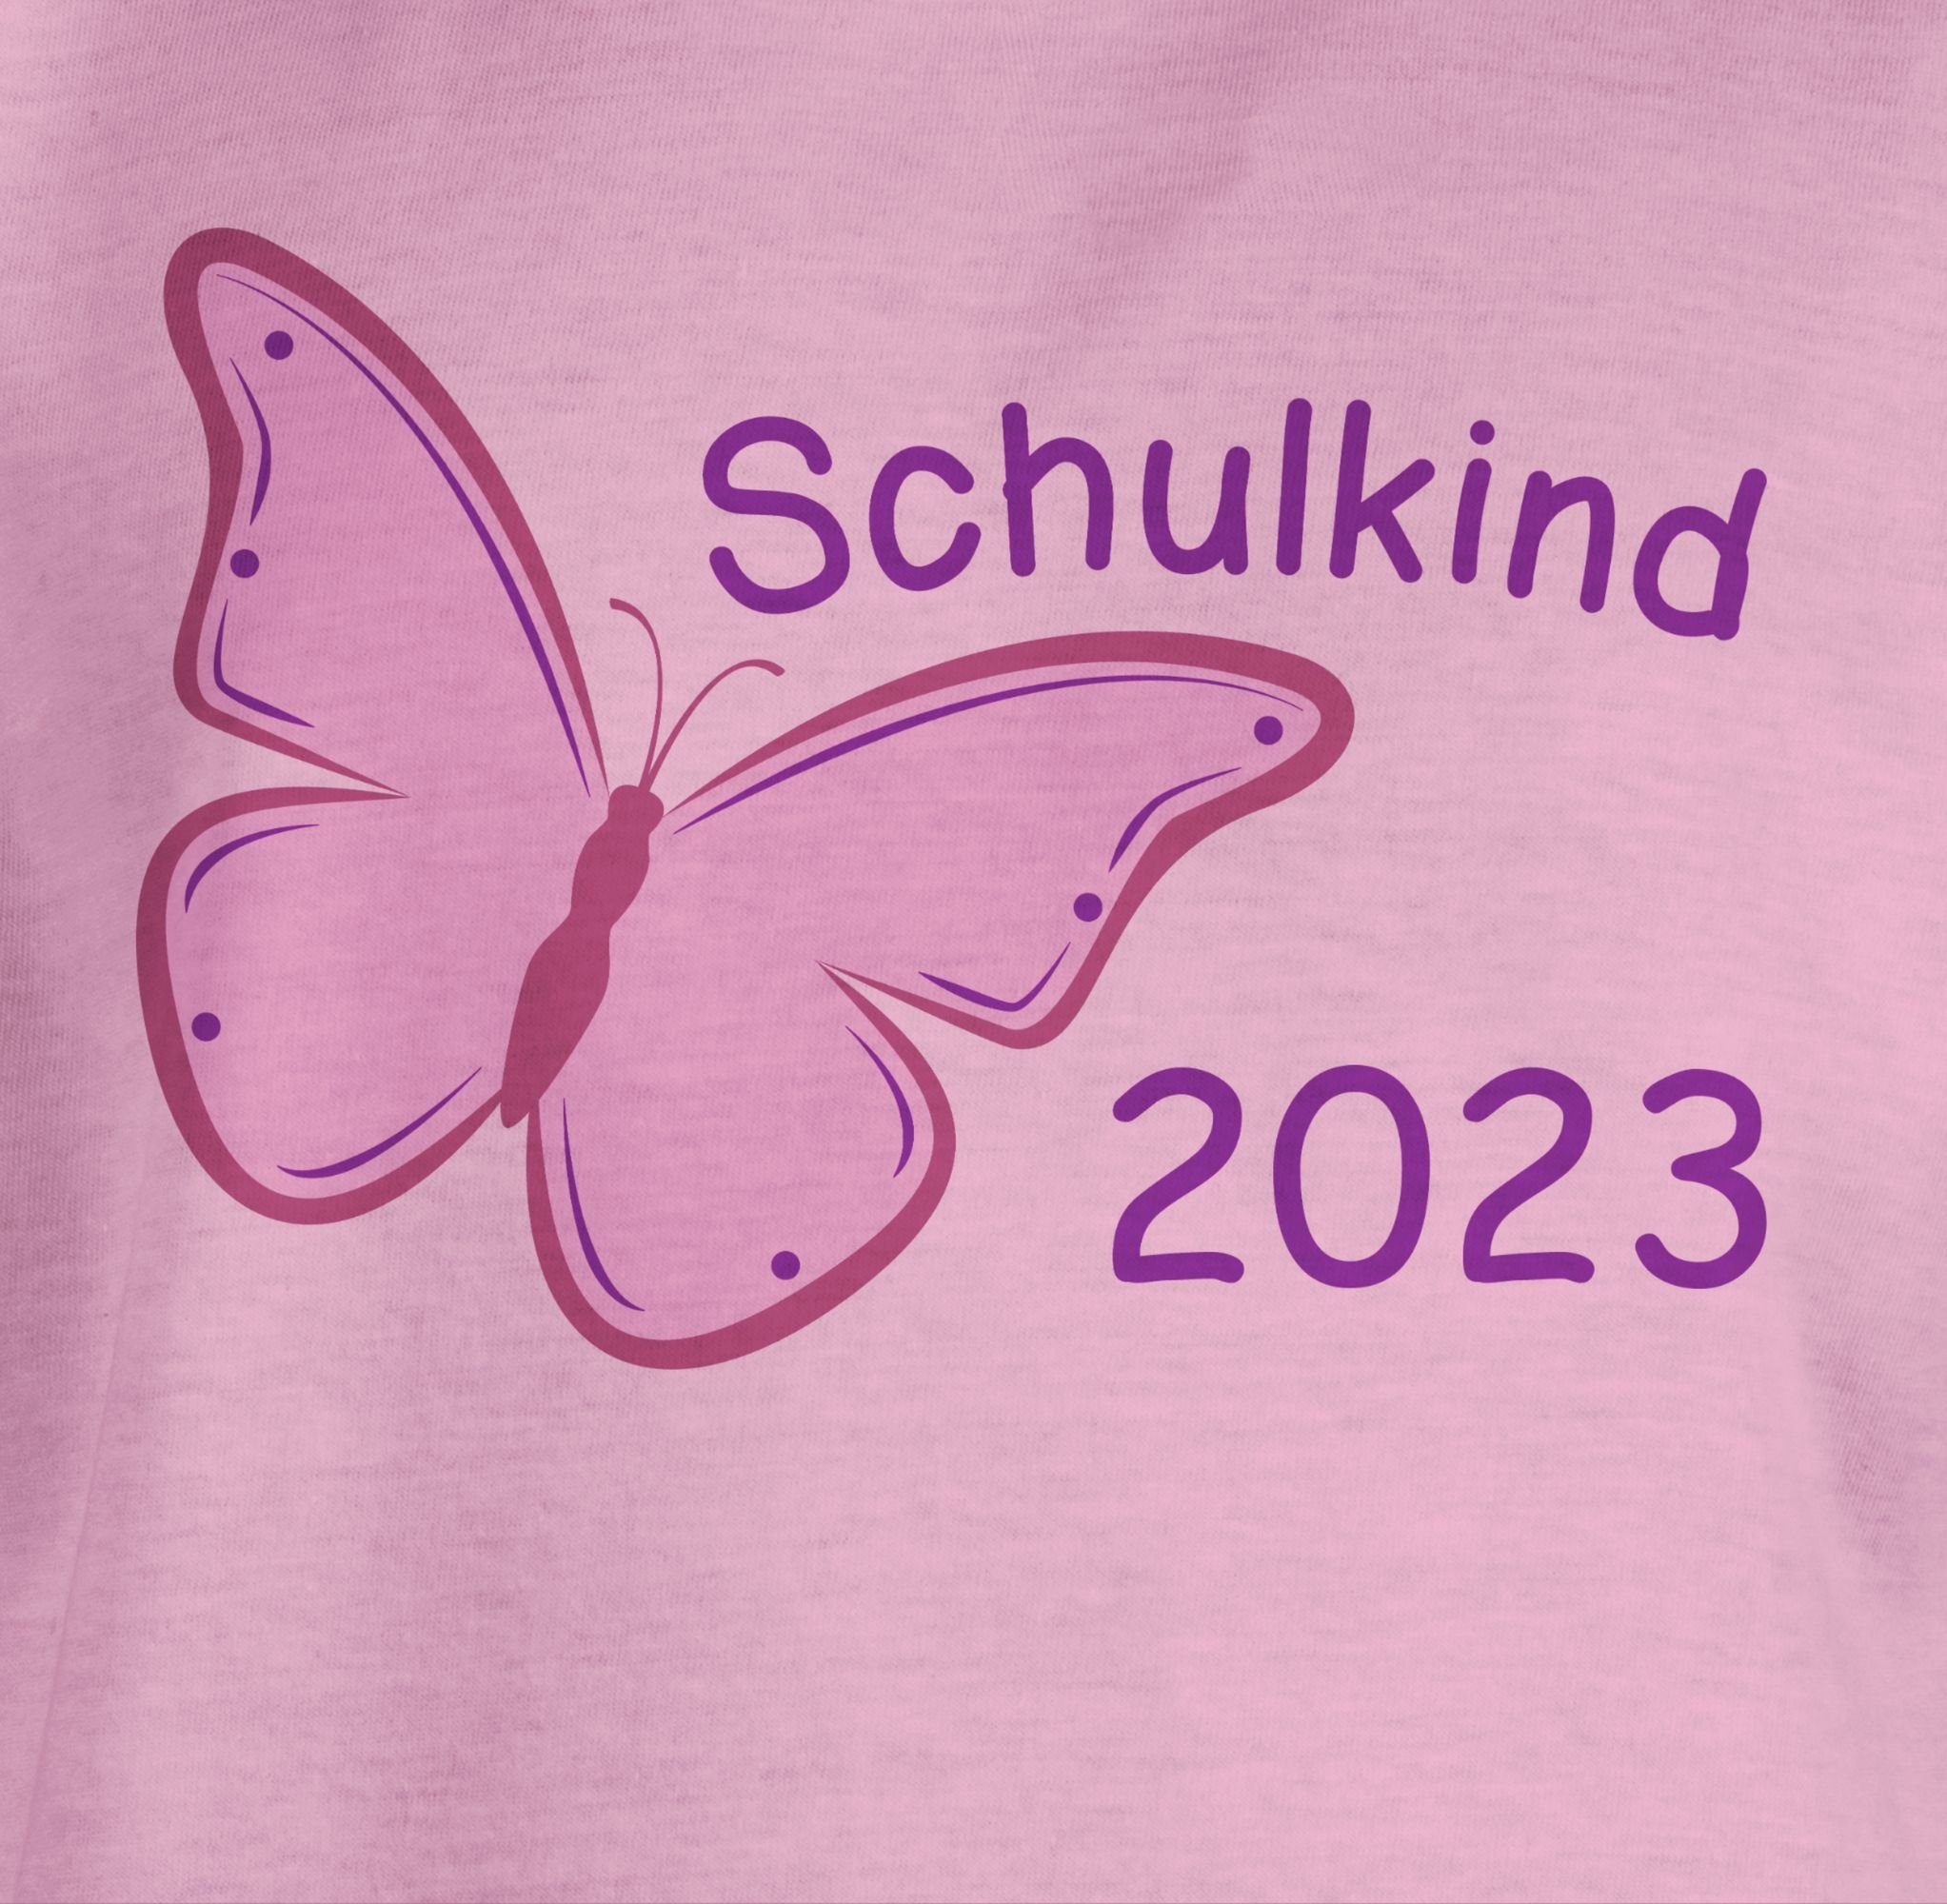 Shirtracer T-Shirt Schulkind Rosa Einschulung Mädchen Schmetterling 2023 1